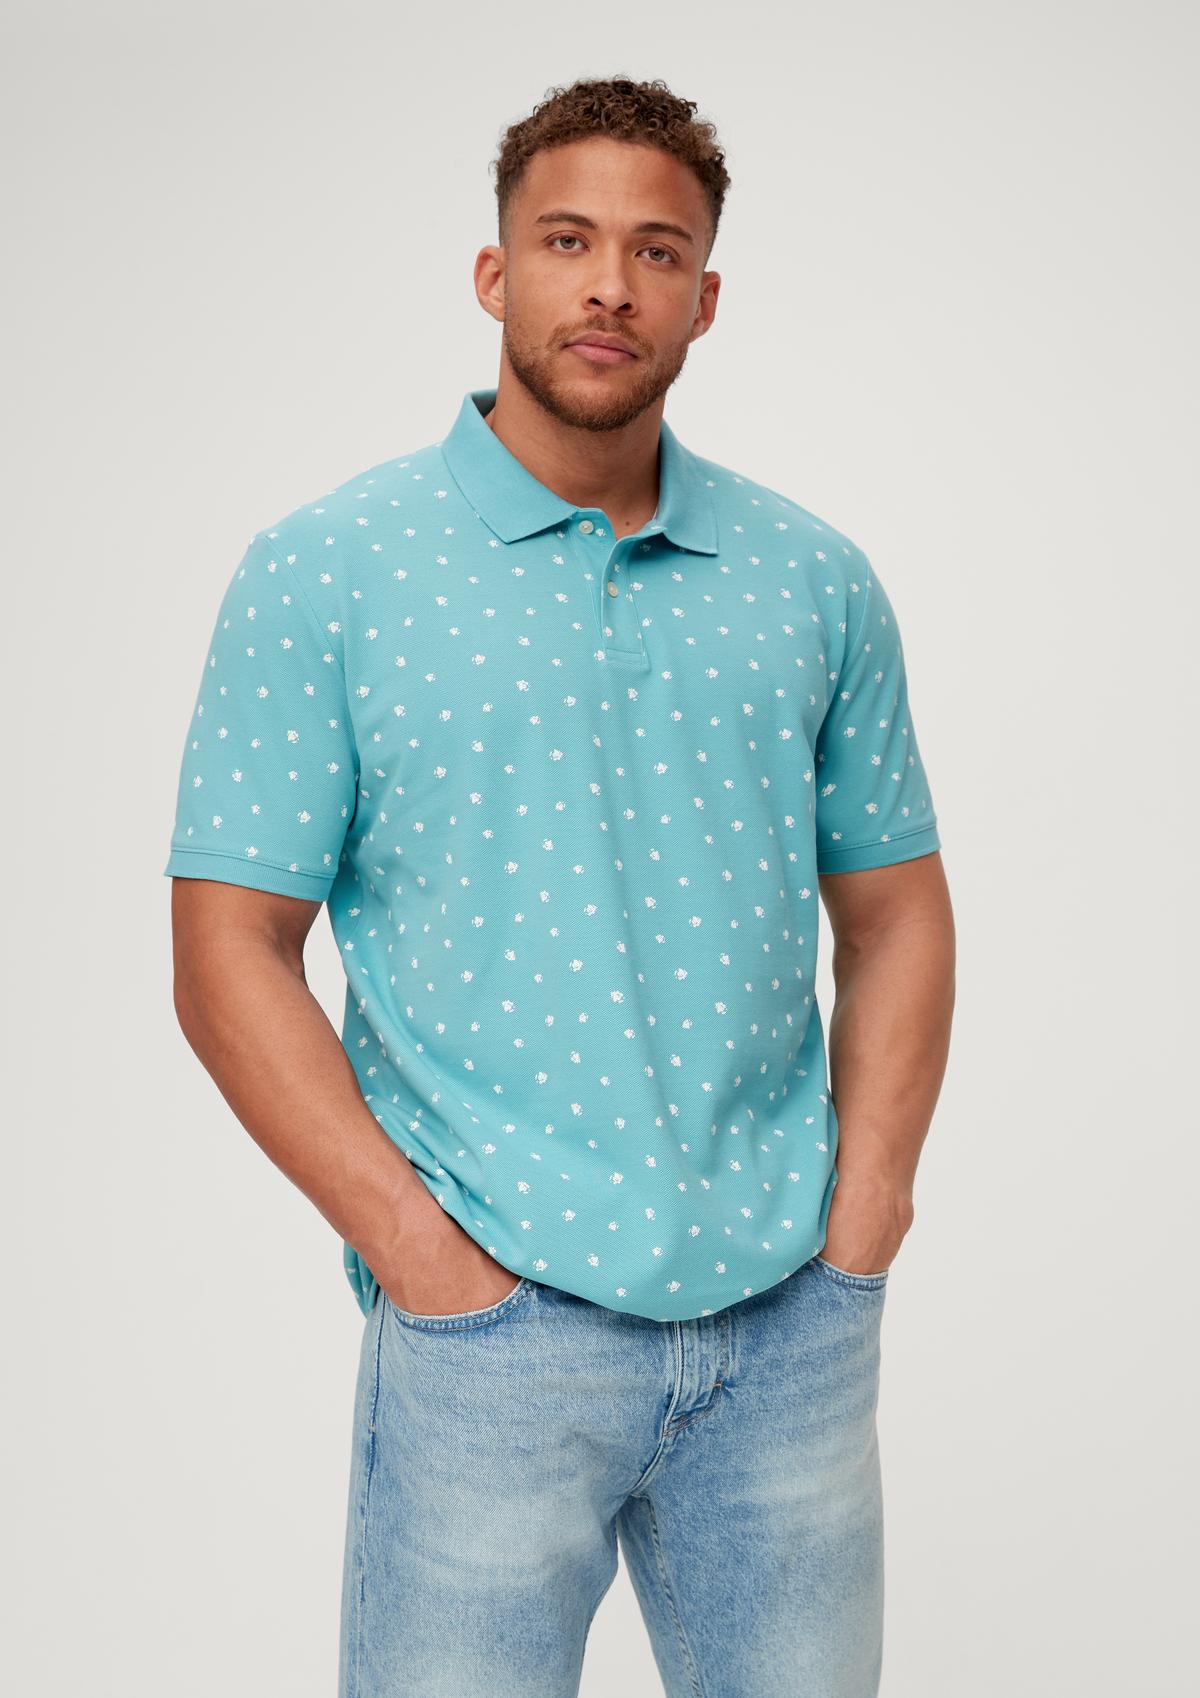 Polo minimalist - with a print navy shirt